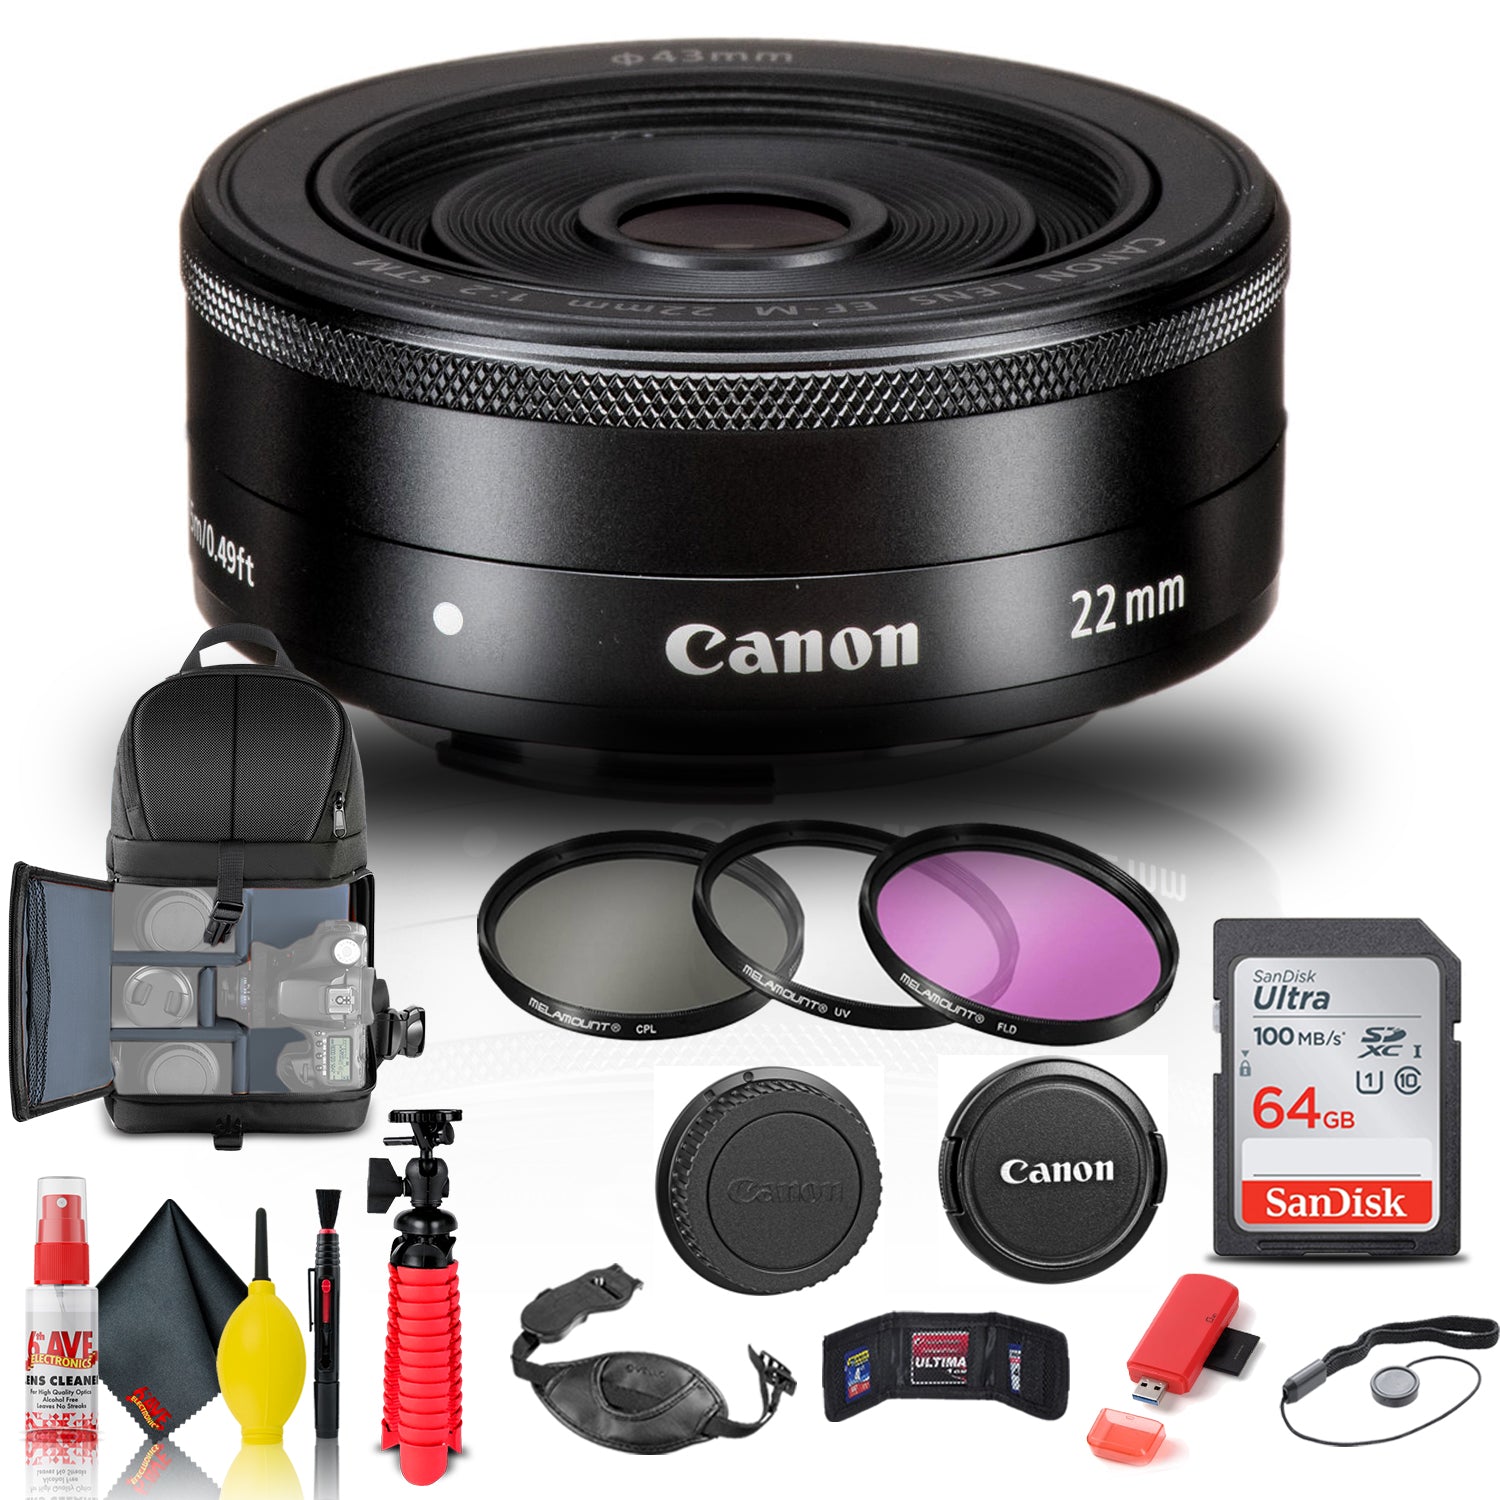 Canon EF-M 22mm f/2 STM Lens (5985B002) + Filter + BackPack + 64GB Card + More